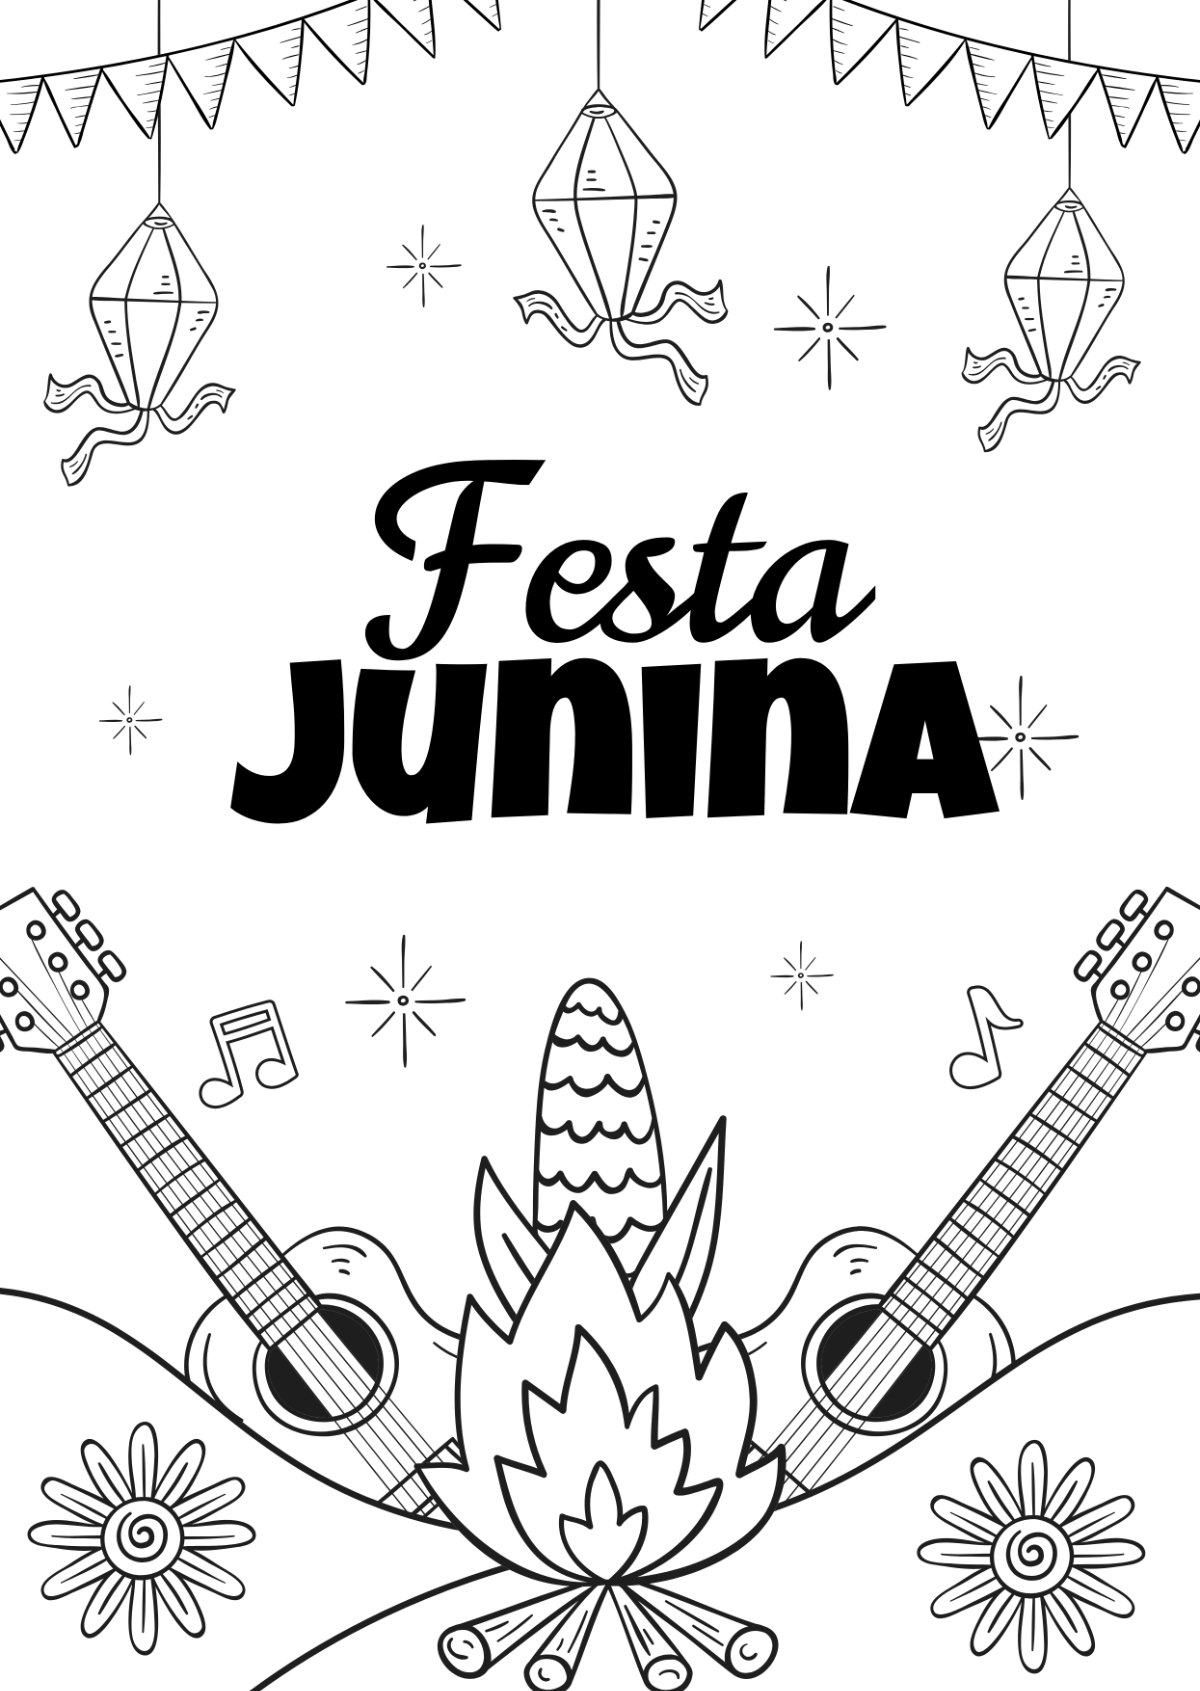 Free Festive Festa Junina Drawing Template